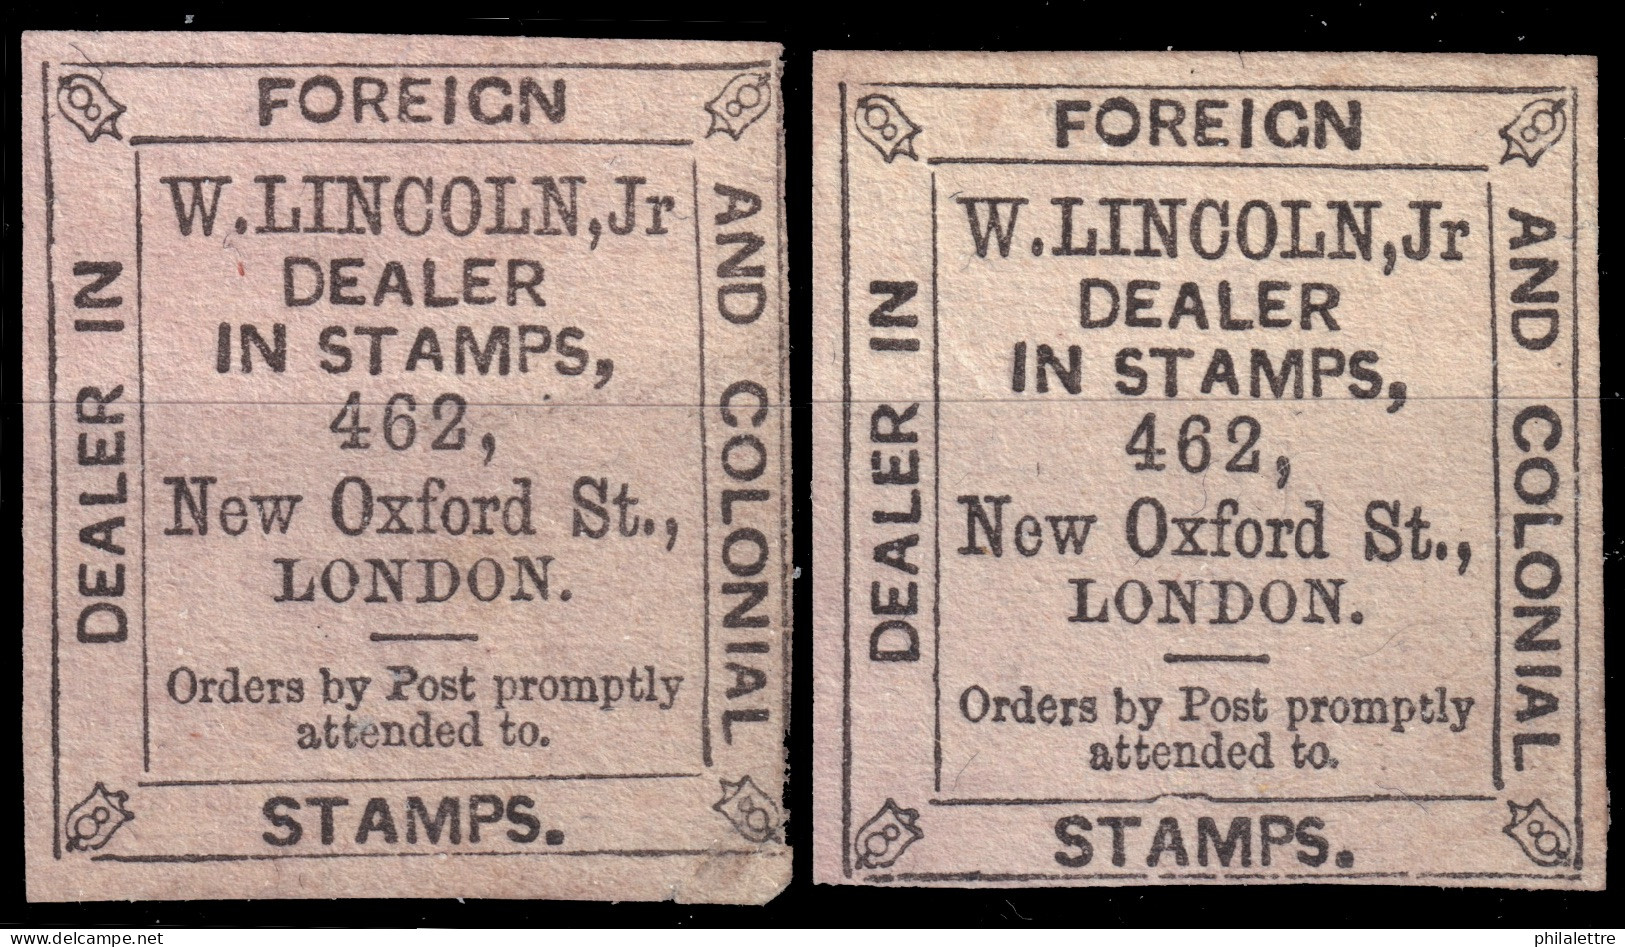 ROYAUME-UNI / UNITED KINGDOM - 2x 1900s/1920s Labels For Stamp Dealer William Lincoln, Jr. Black On Pinkish White - Werbemarken, Vignetten